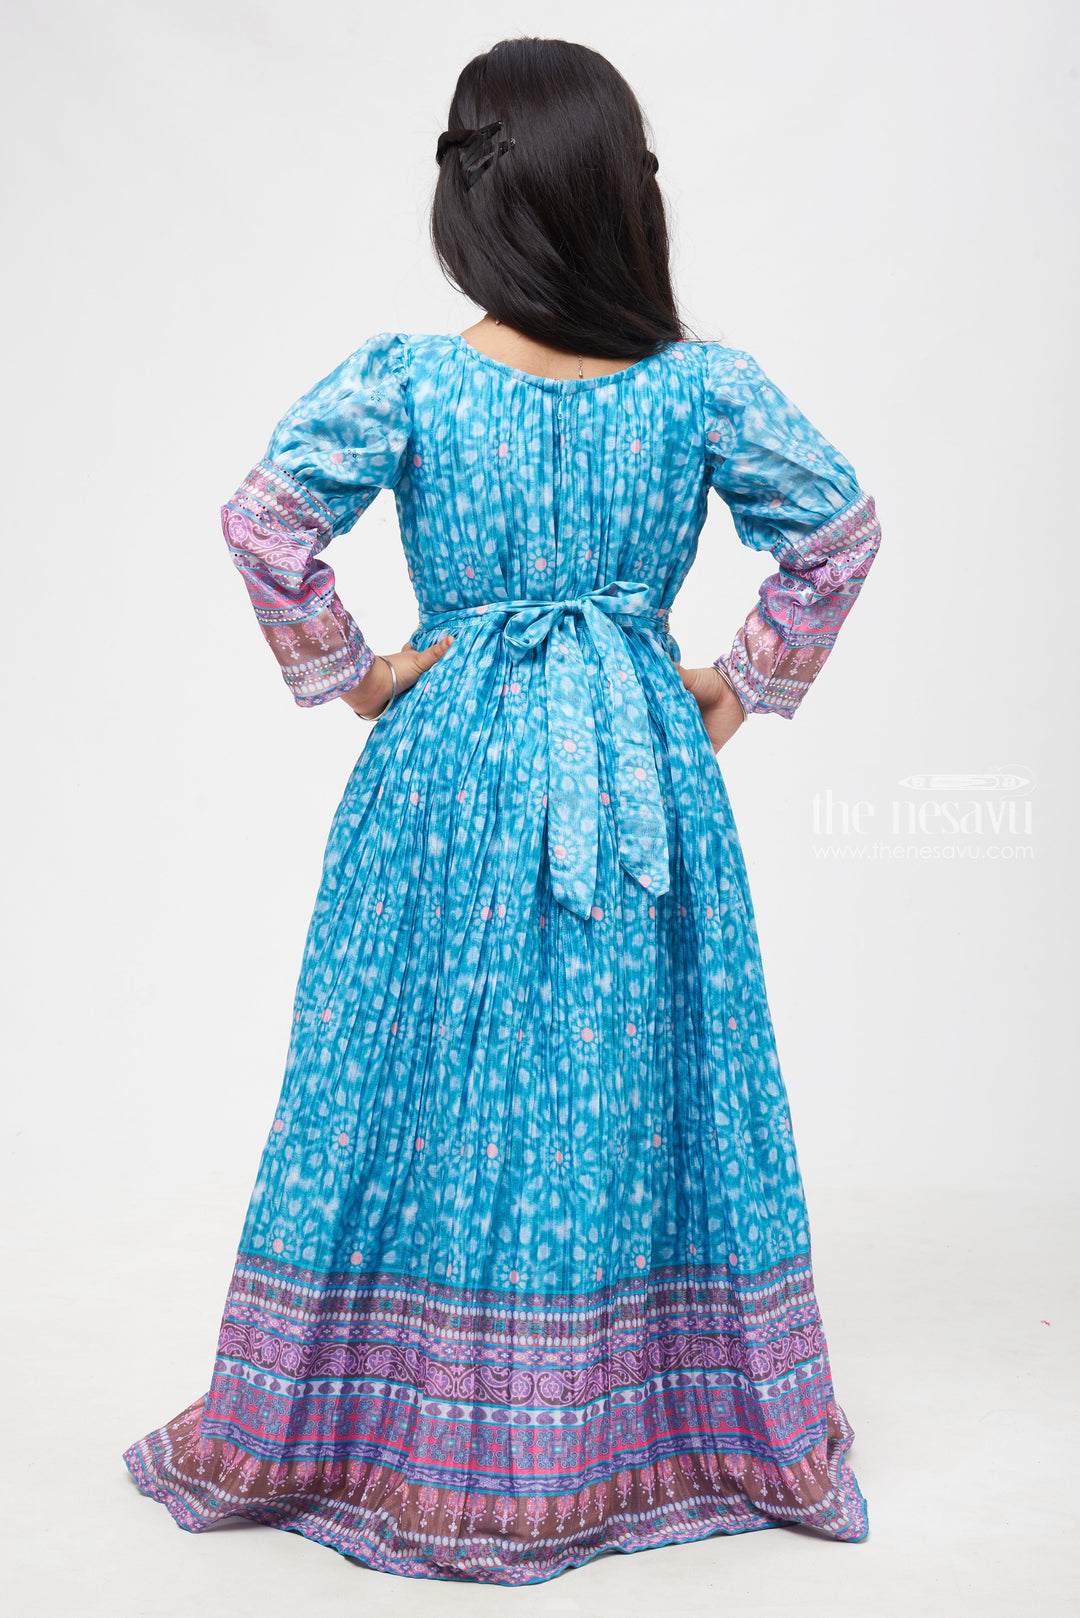 The Nesavu Girls Party Gown Azure Blooms: Stone Embroidered Floral Blue Anarkali for Girls- Premium Designer Dress Collections Nesavu Festive Diwali Anarkali Outfit | Kid’s Stylish Anarkali Dress | The Nesavu